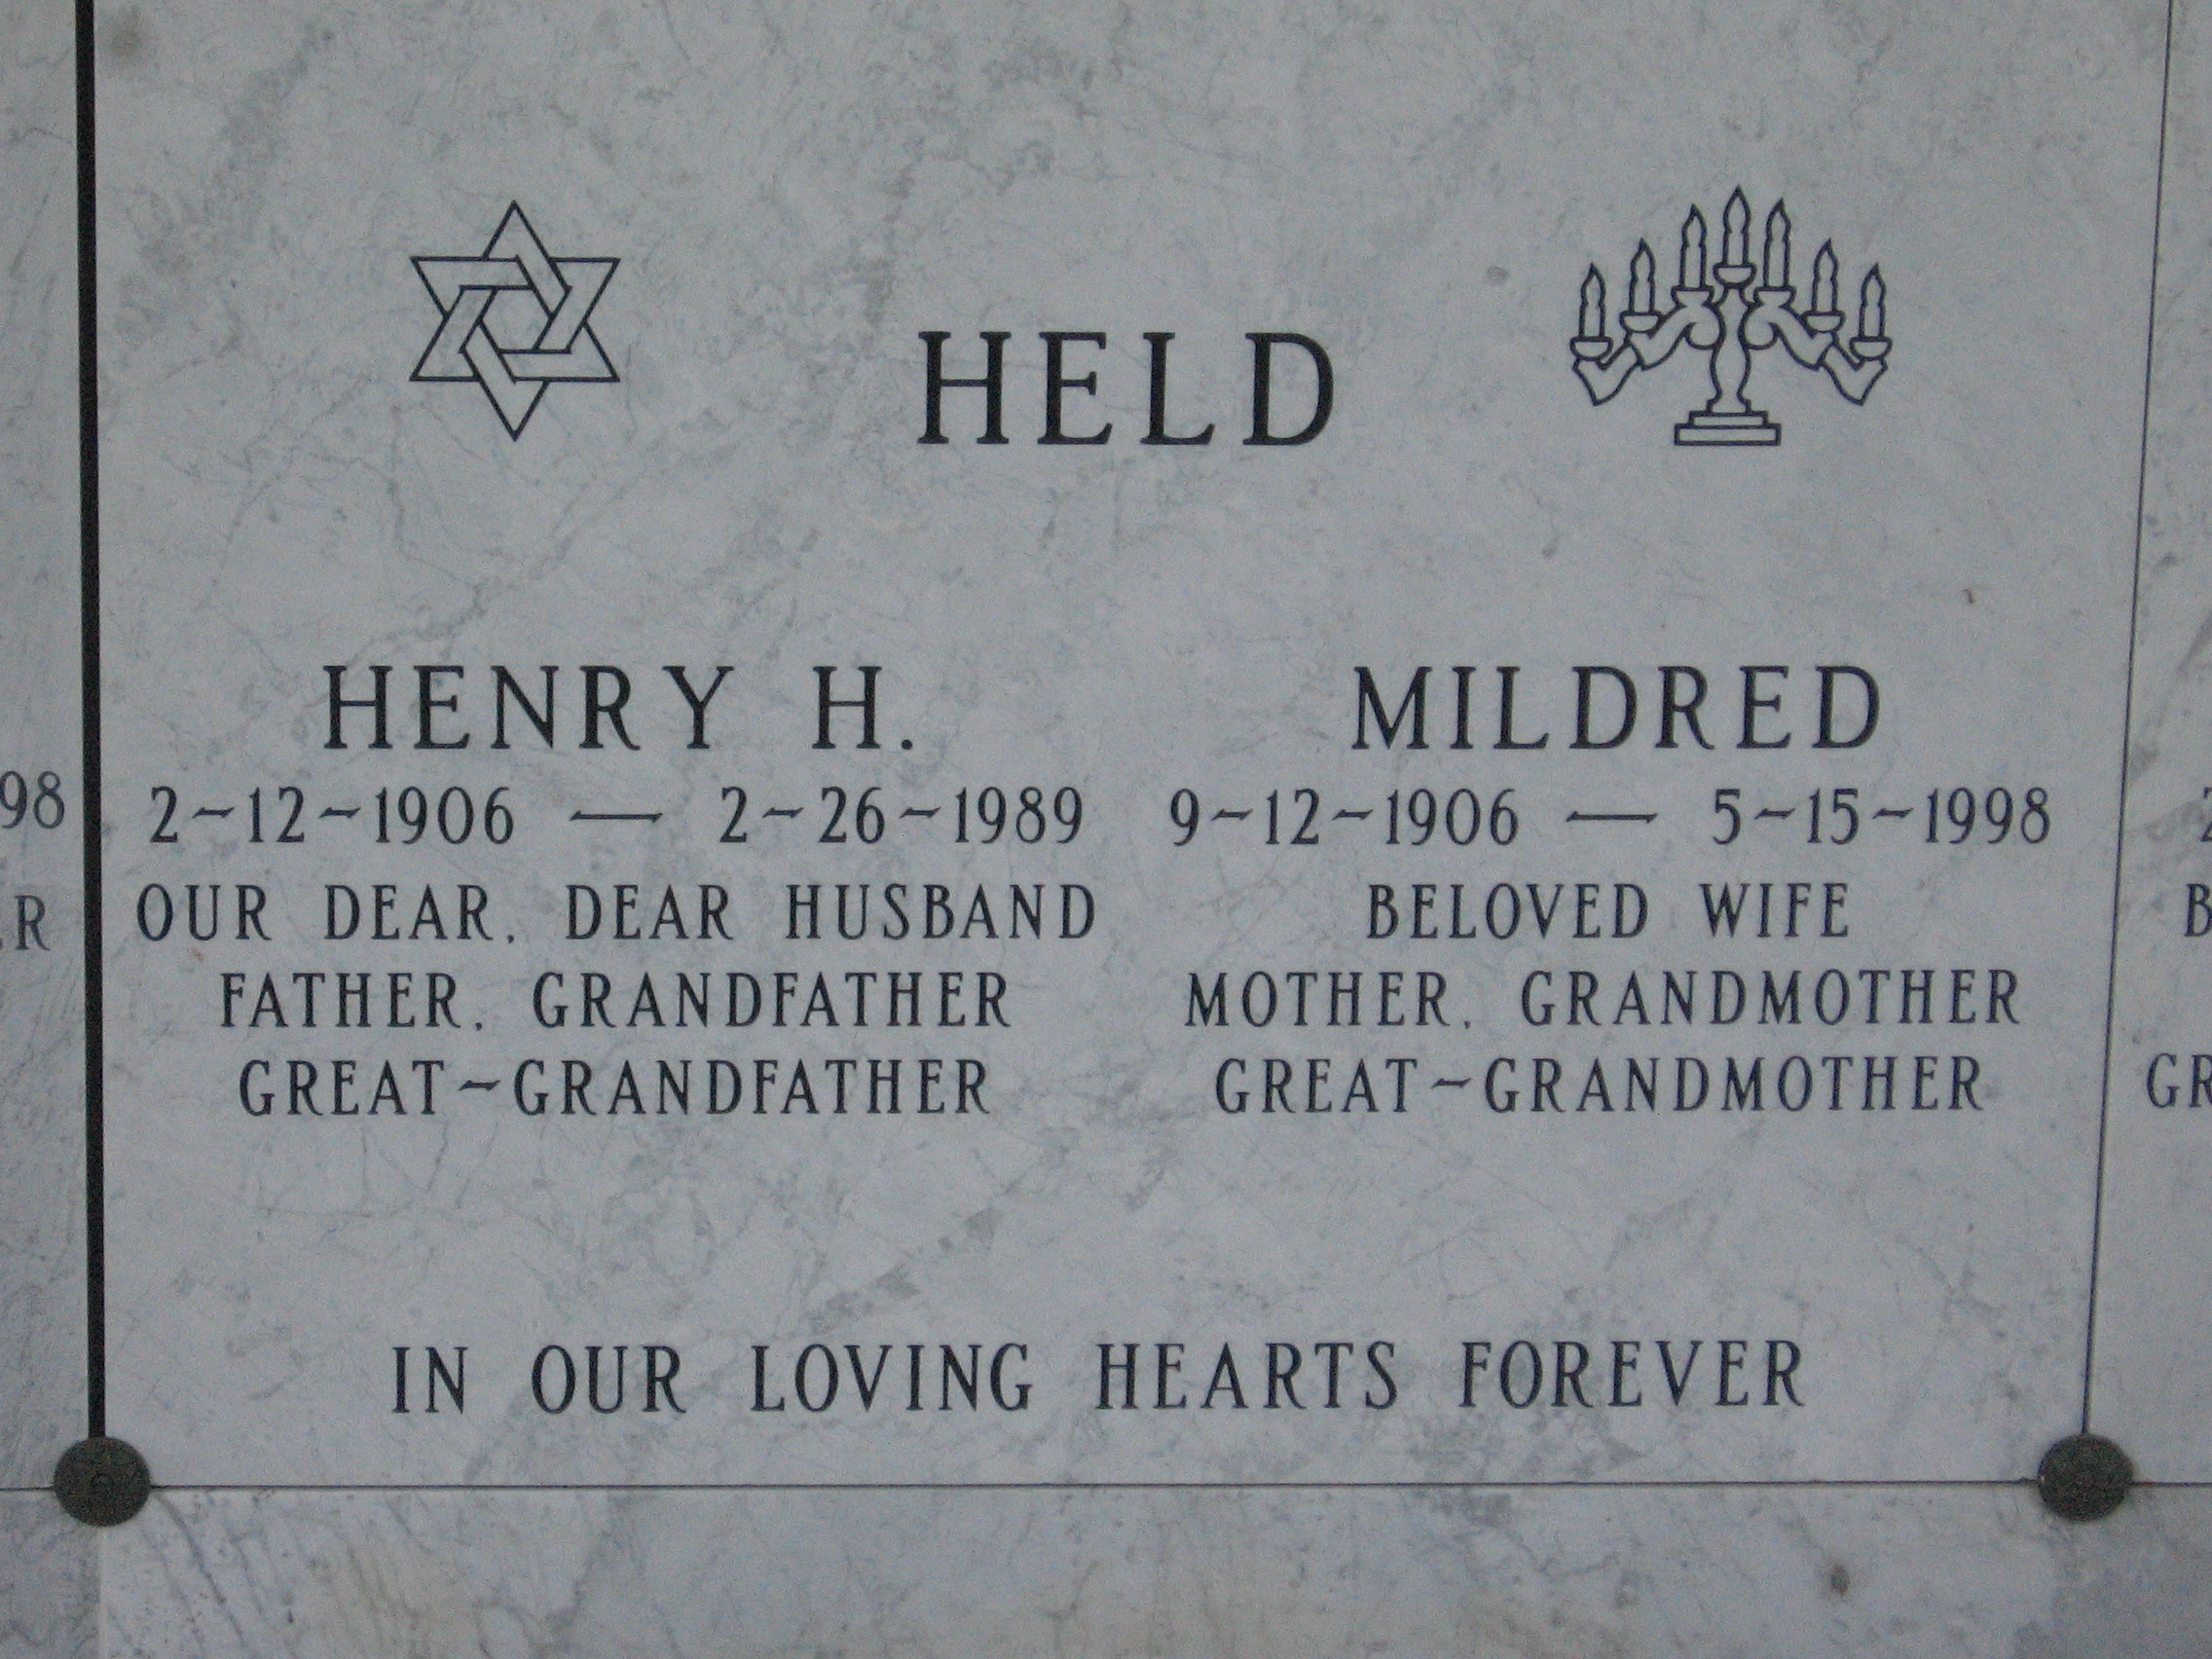 Henry R Held